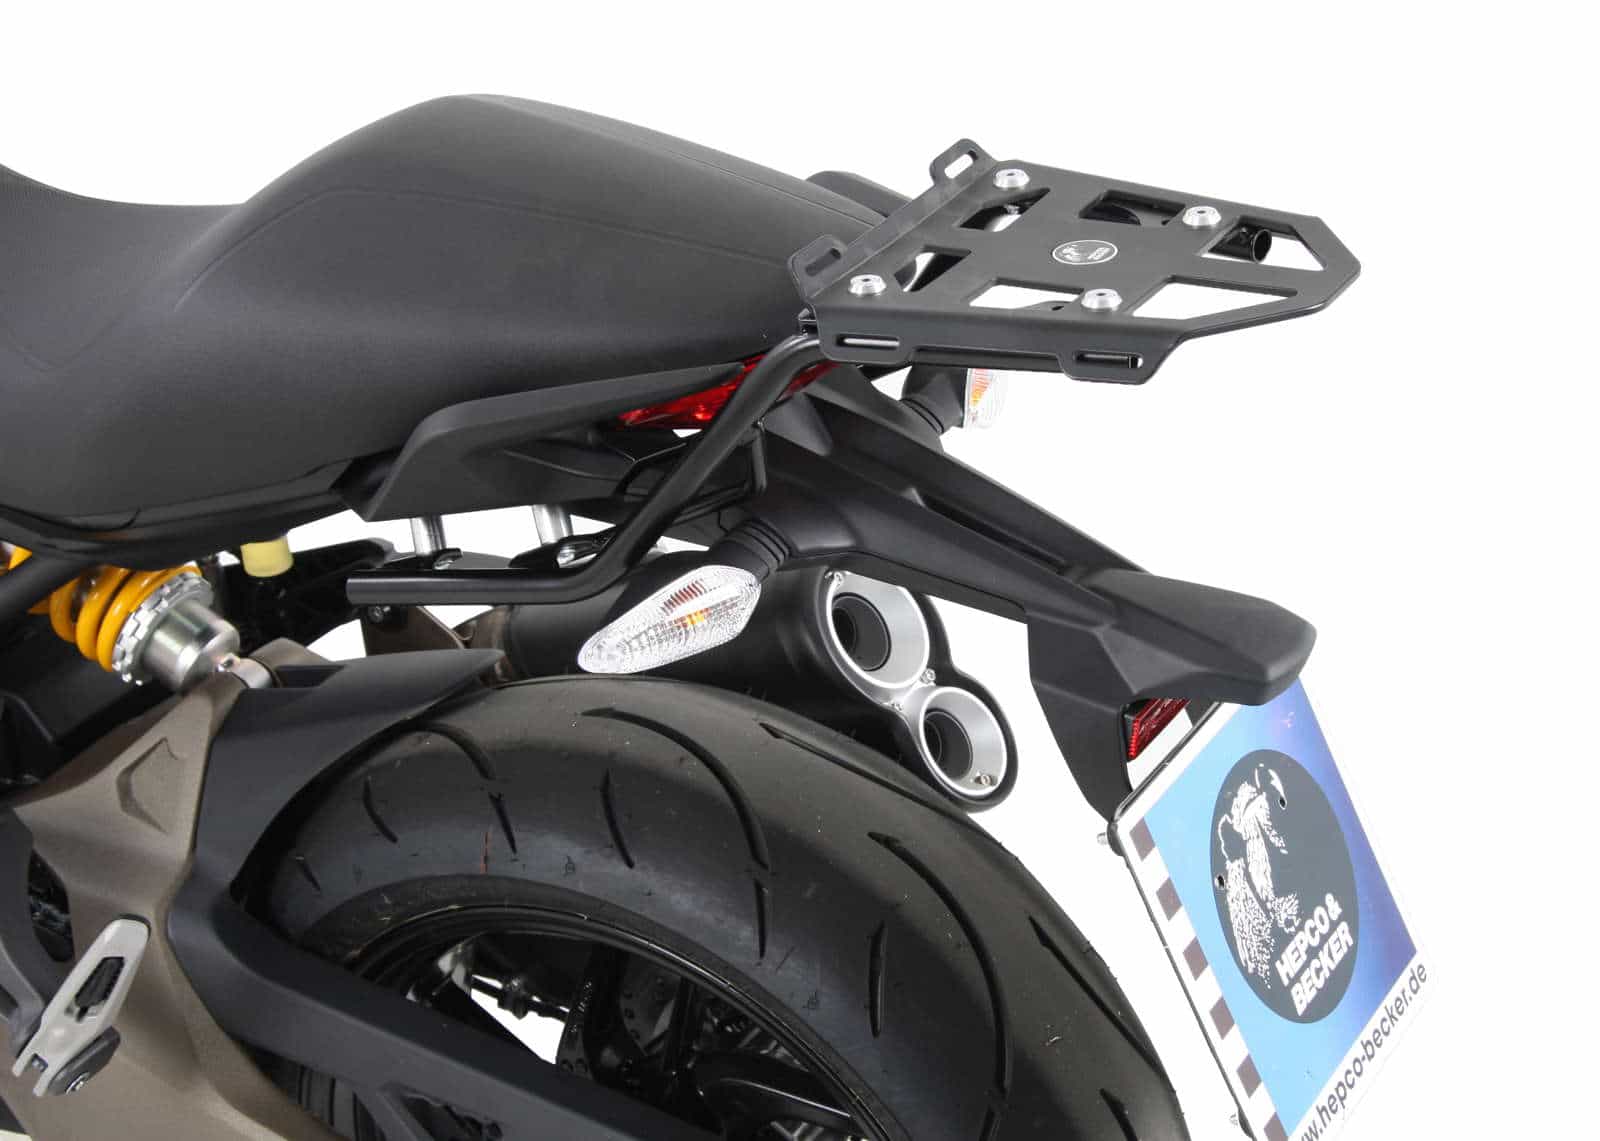 Minirack soft luggage rear rack for Ducati Monster 821 (2014-2017)